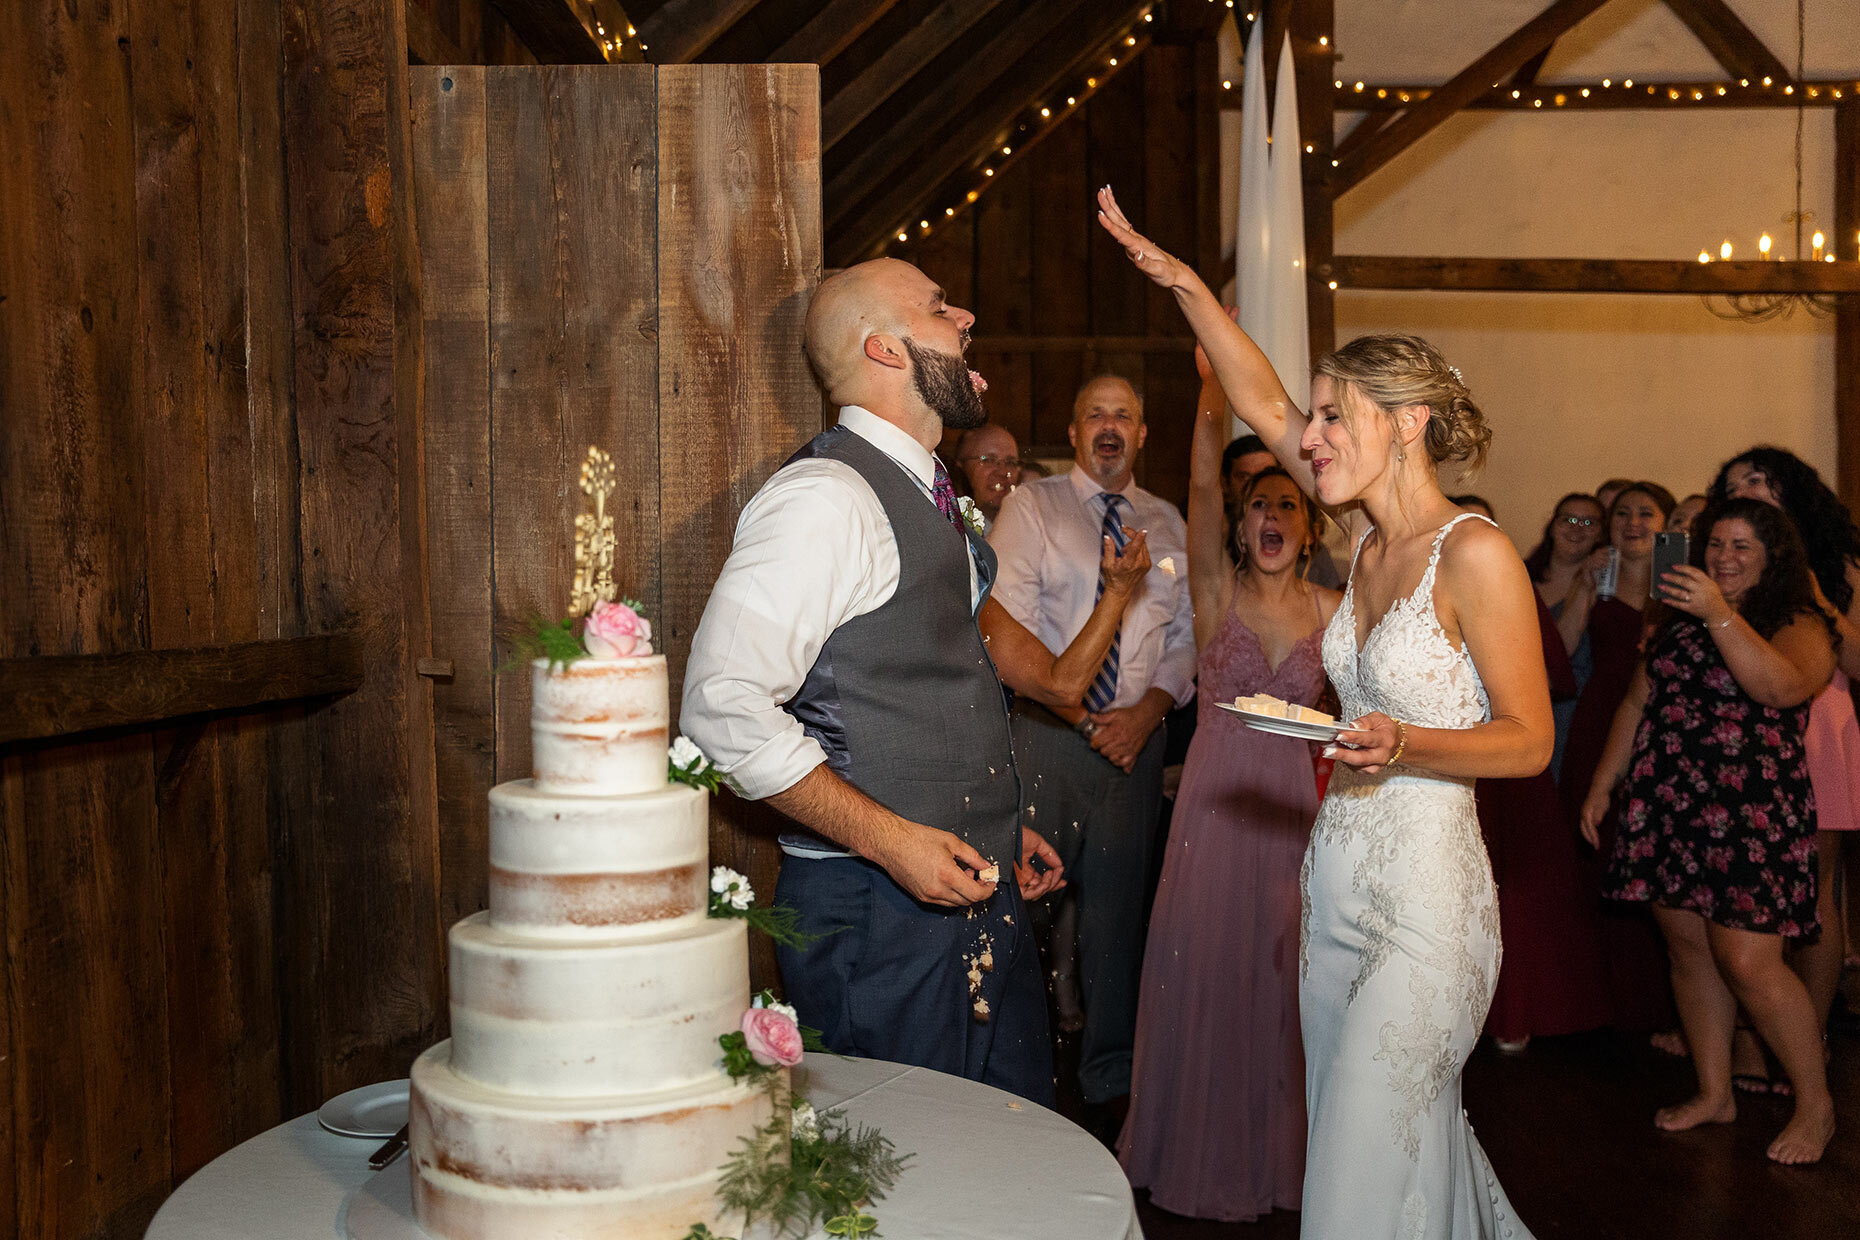 Bride smashes cake in groom's face